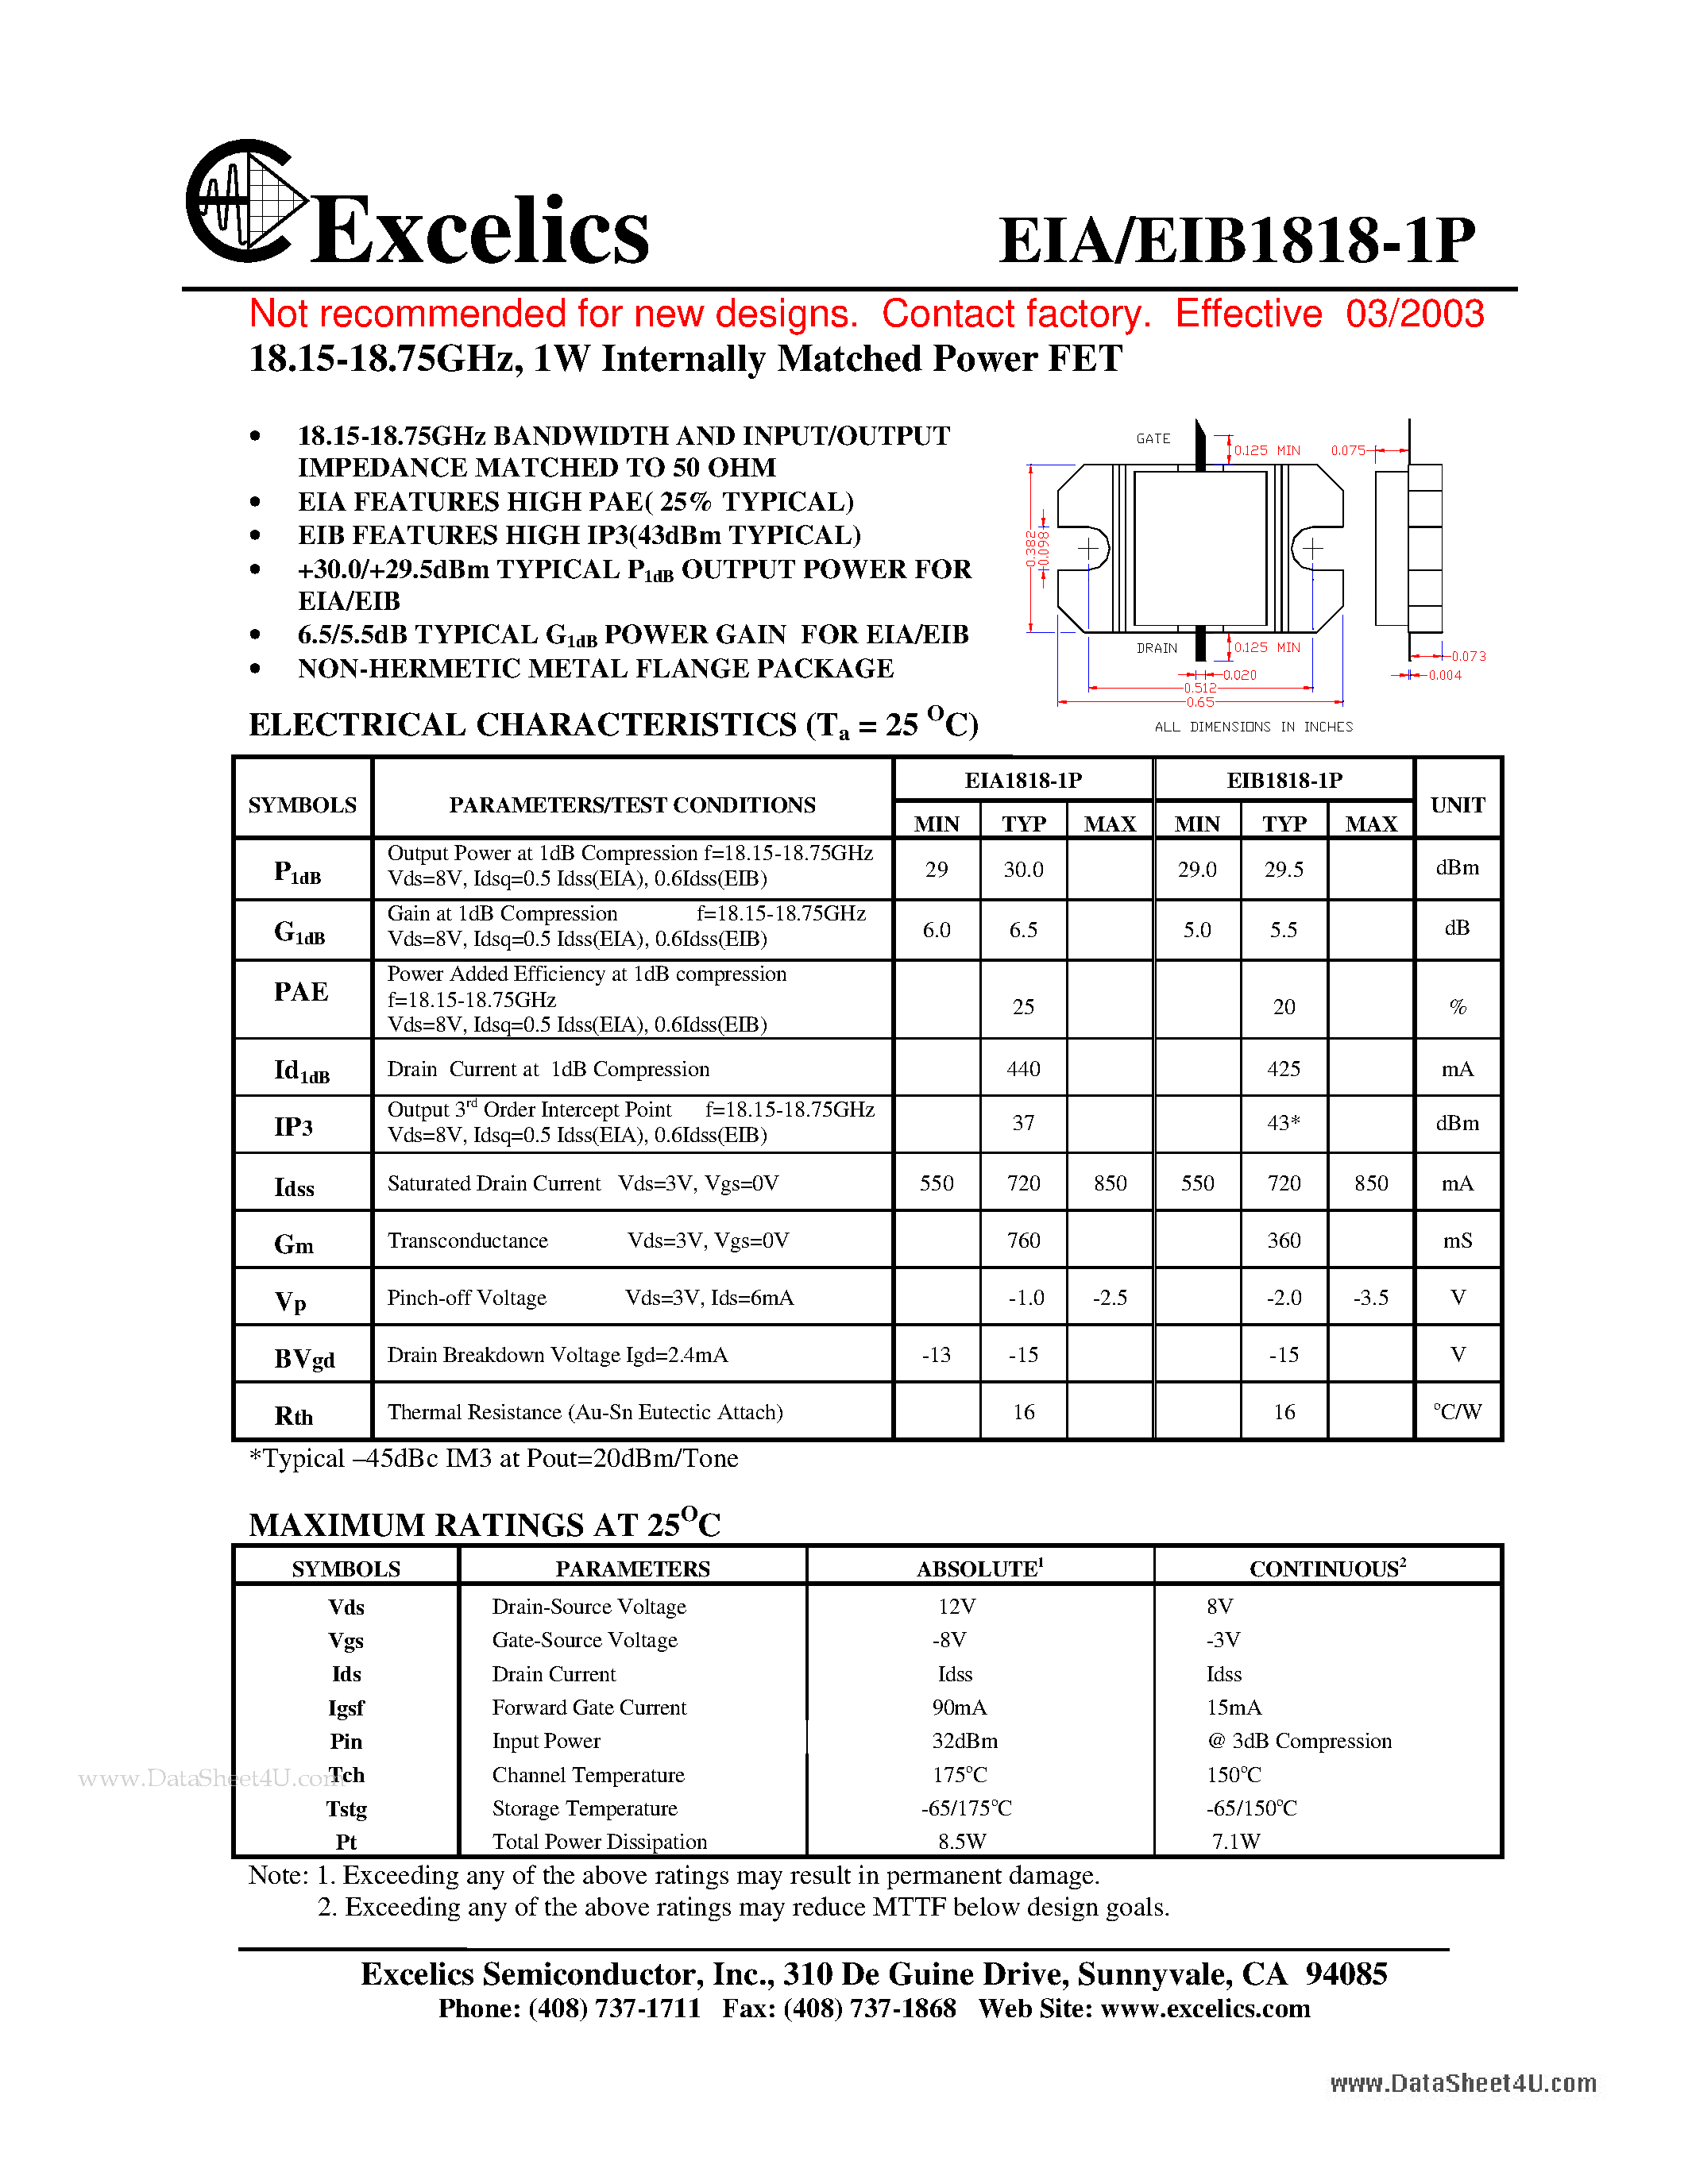 Даташит EIA1818-1P - 18.15-18.75GHz 1W Internally Matched Power FET страница 1